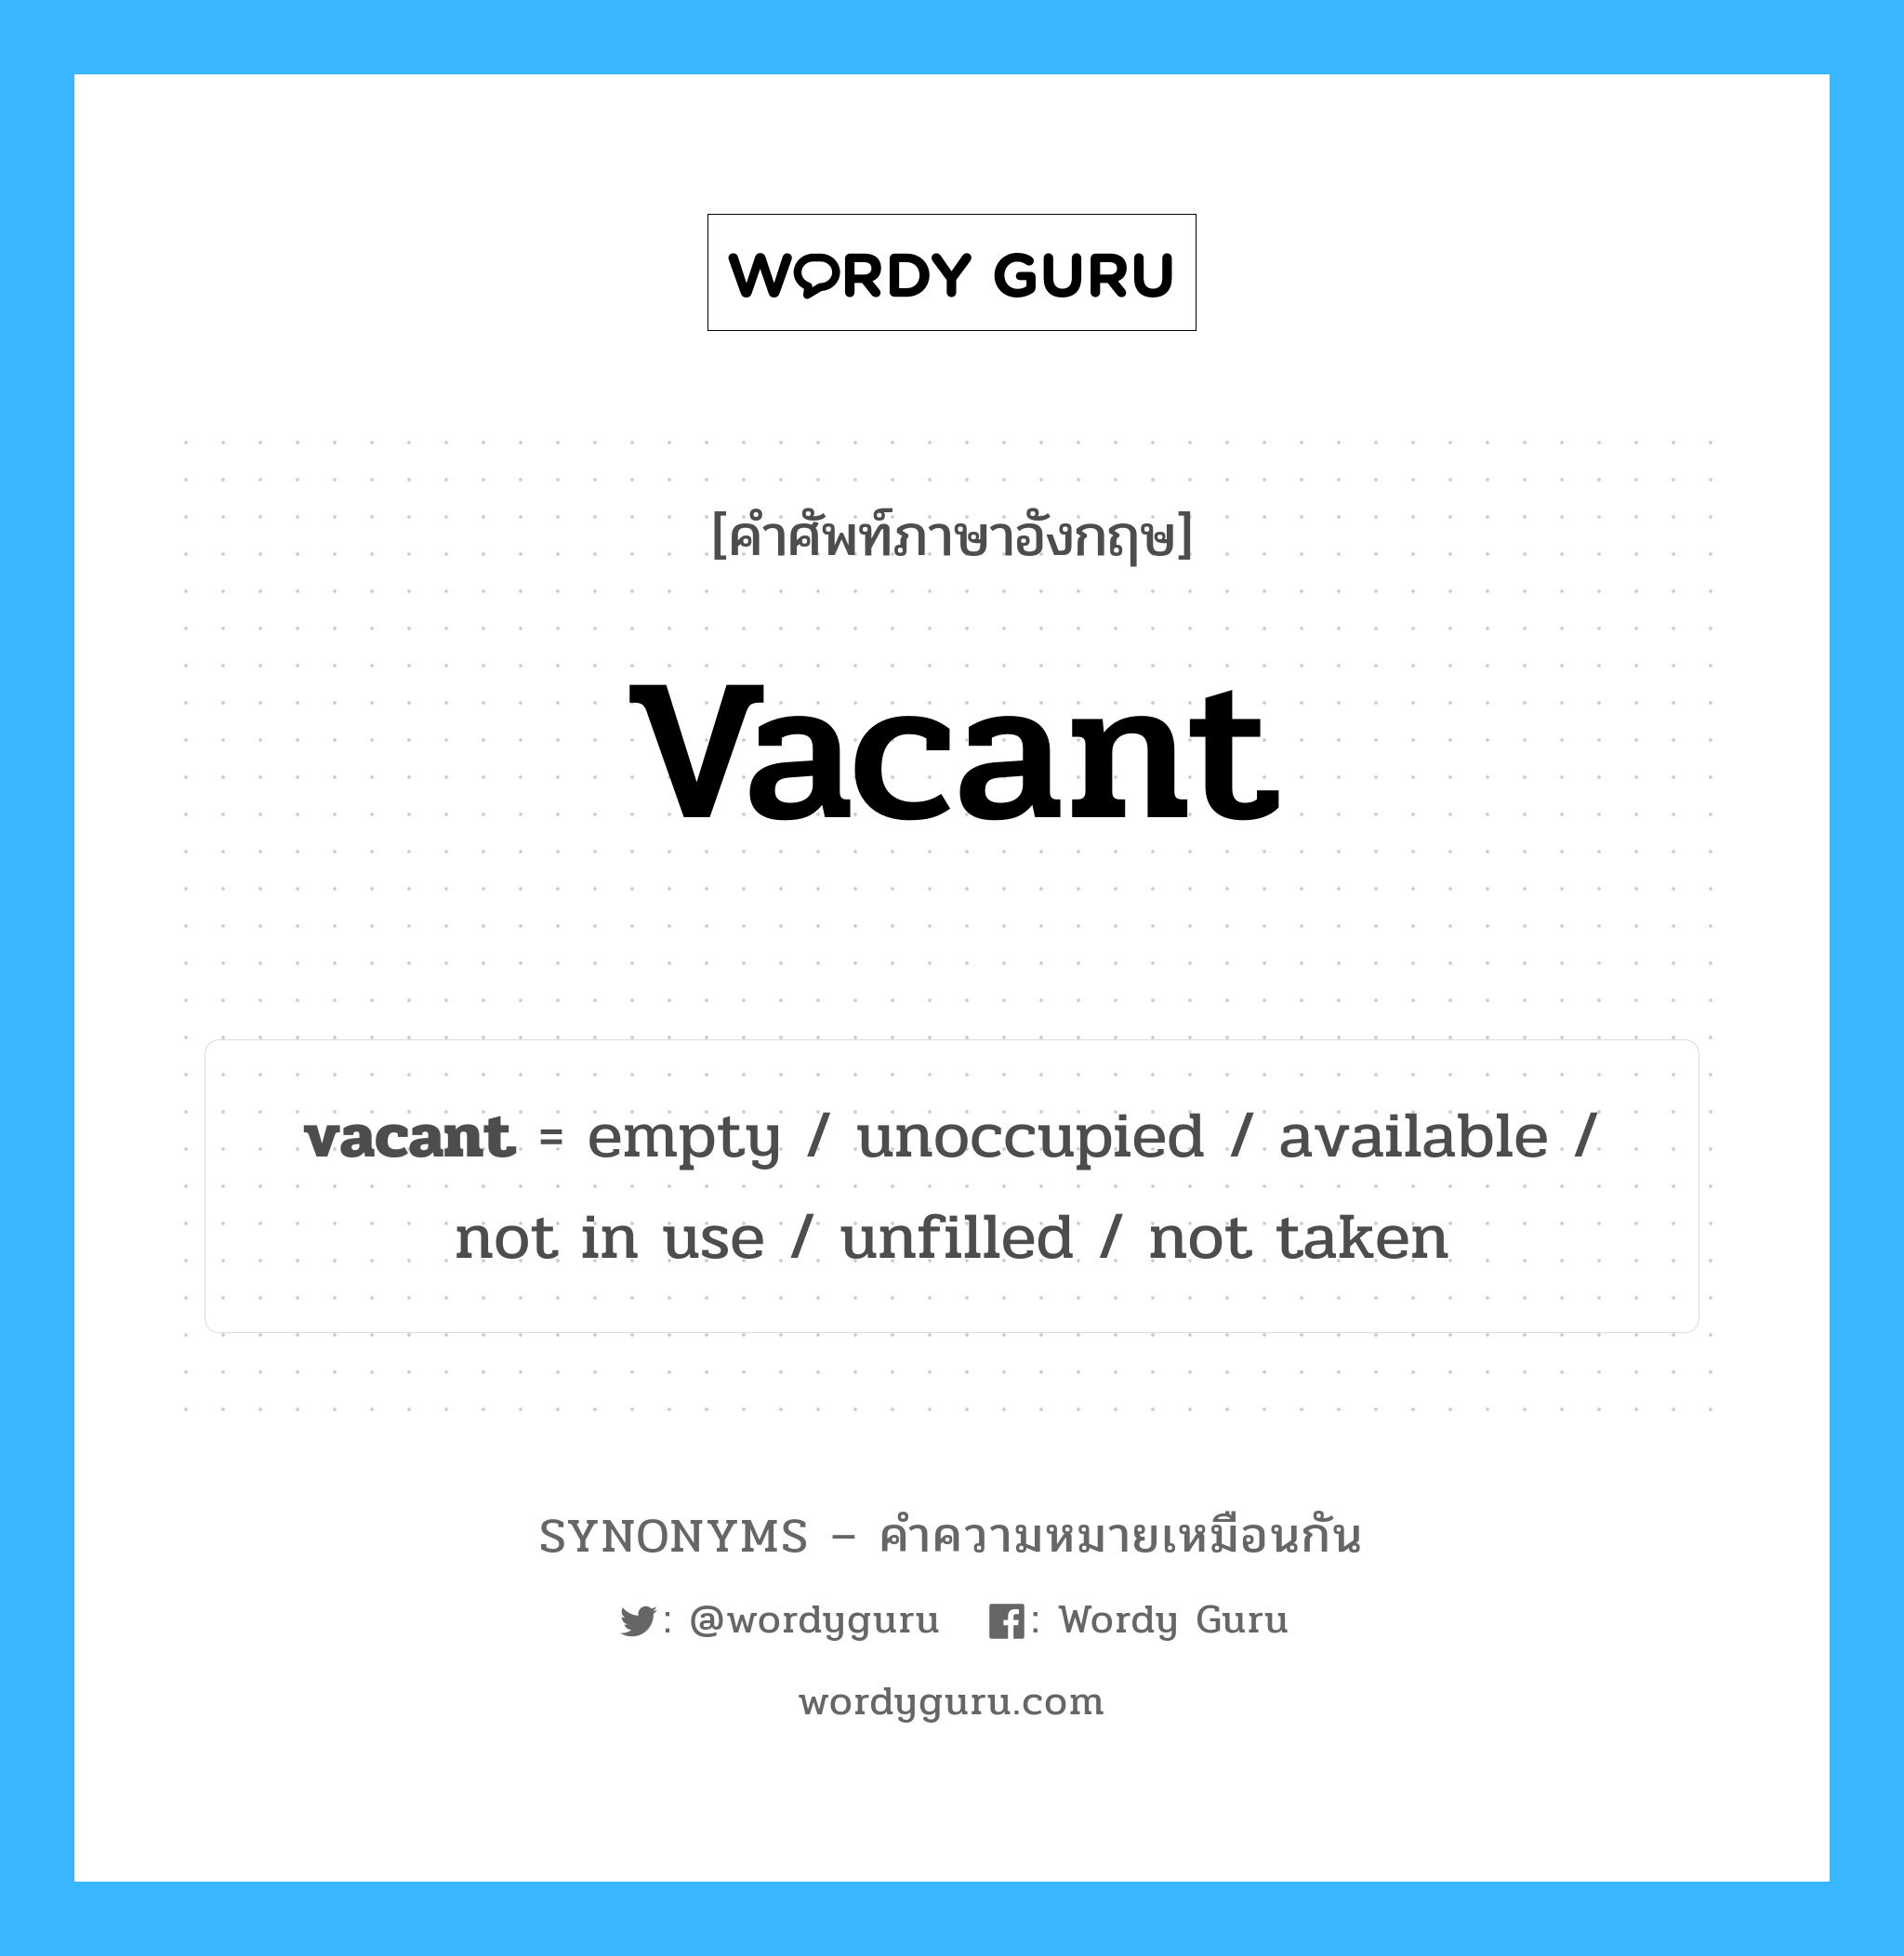 available เป็นหนึ่งใน vacant และมีคำอื่น ๆ อีกดังนี้, คำศัพท์ภาษาอังกฤษ available ความหมายคล้ายกันกับ vacant แปลว่า พร้อมใช้งาน หมวด vacant